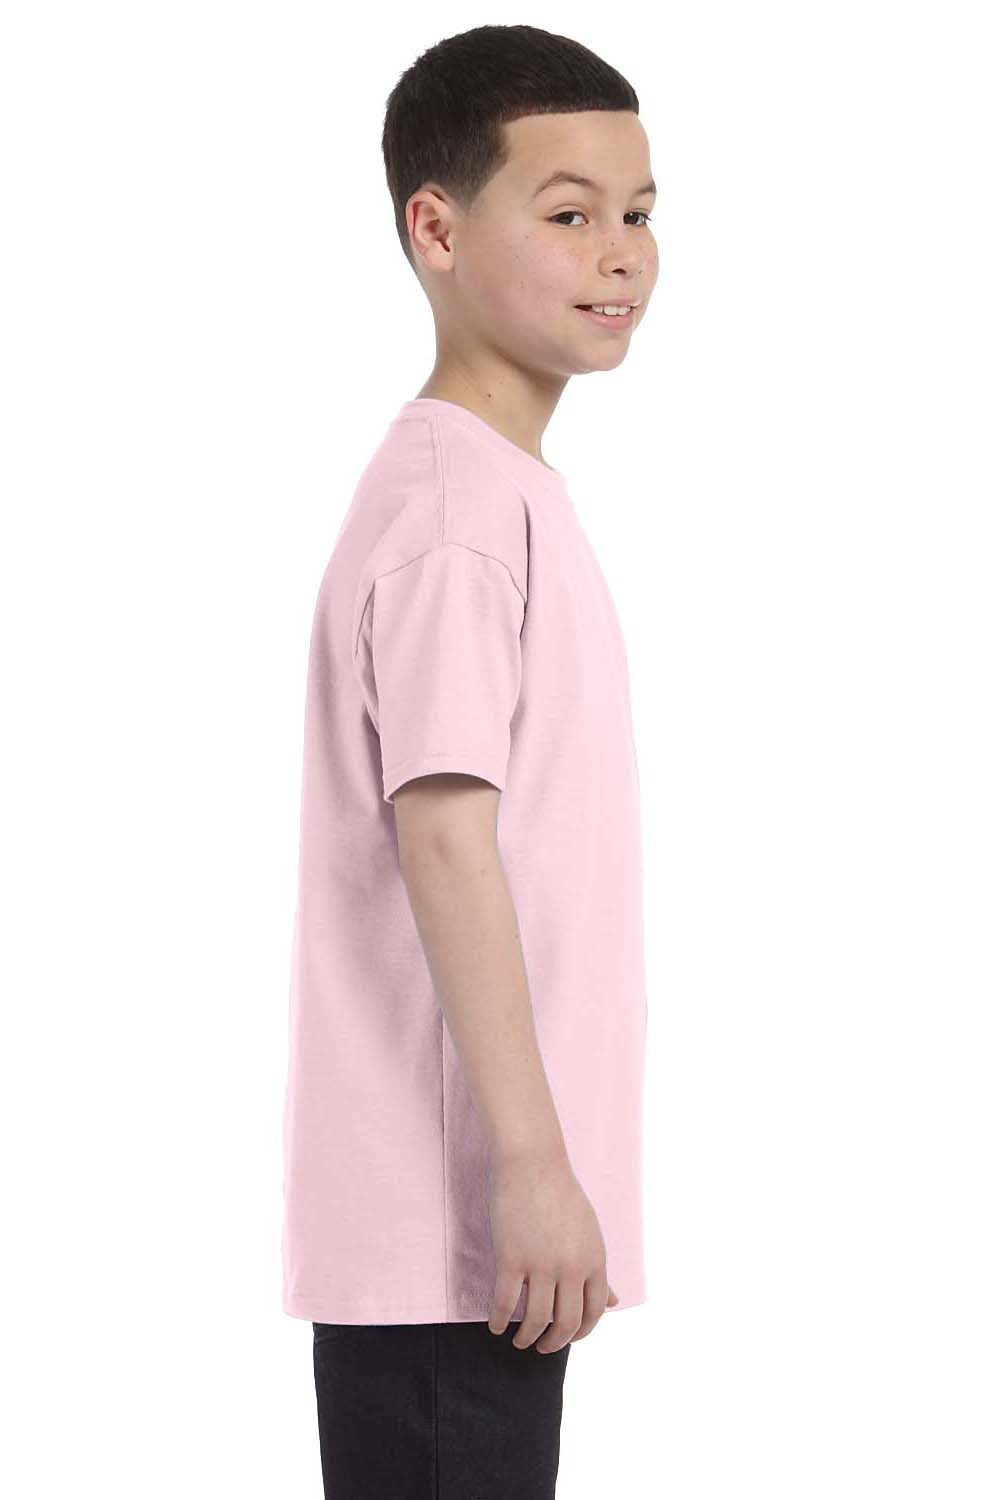 Jerzees 29B Youth Dri-Power Moisture Wicking Short Sleeve Crewneck T-Shirt Classic Pink Side